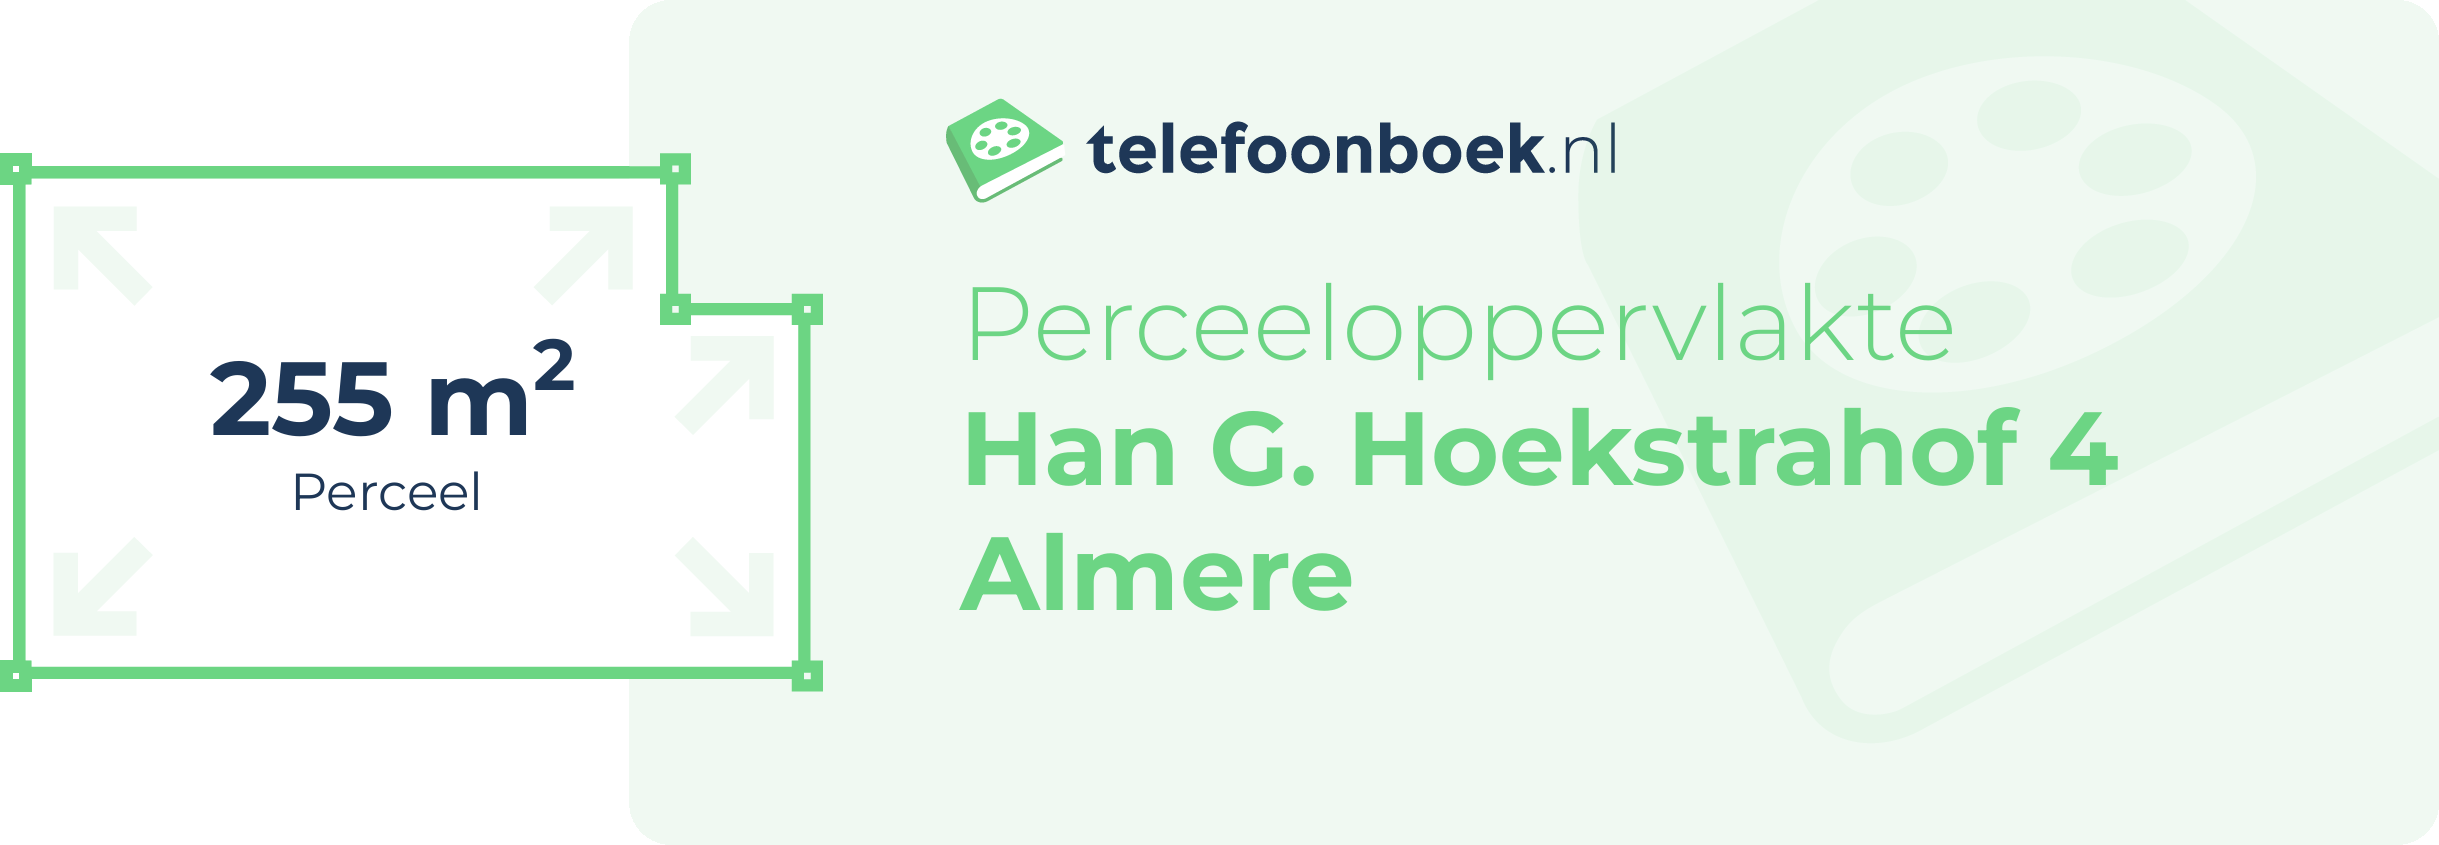 Perceeloppervlakte Han G. Hoekstrahof 4 Almere